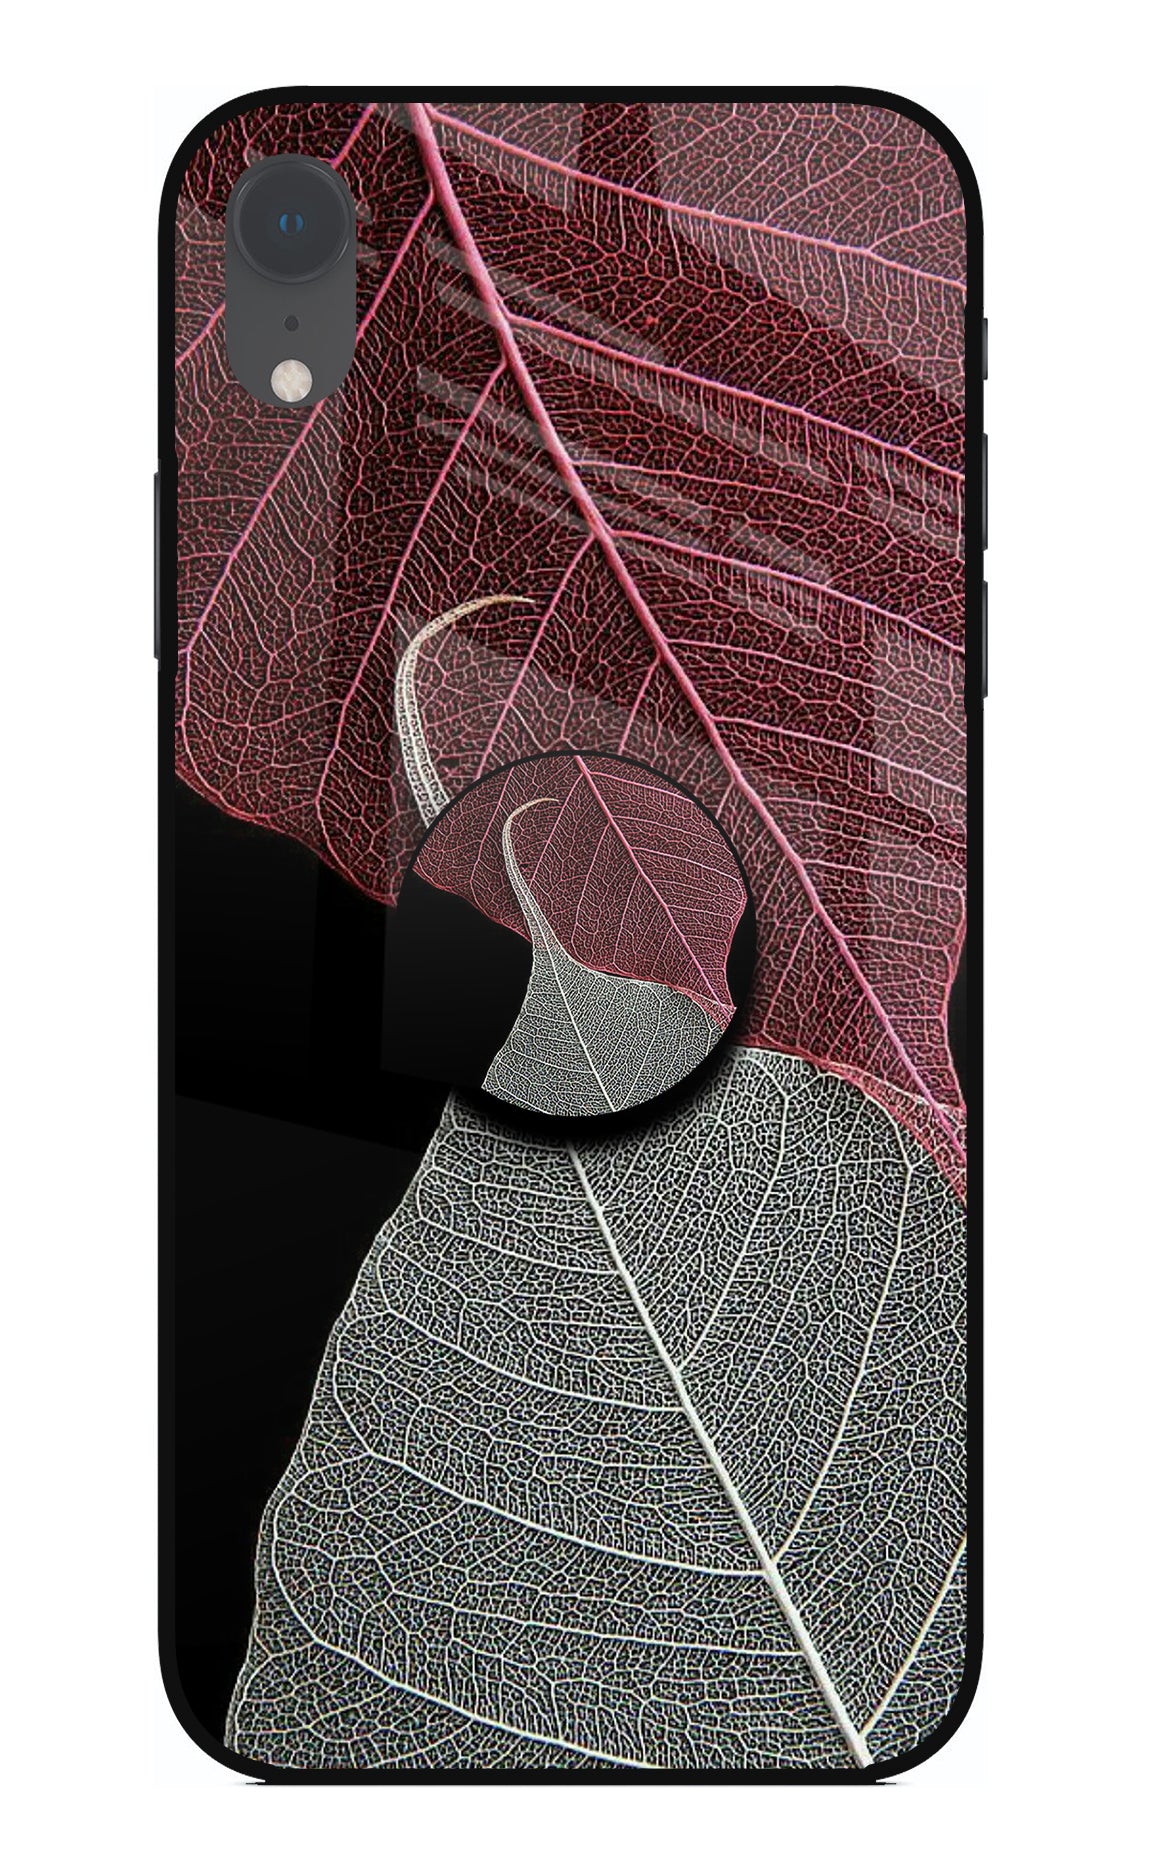 Leaf Pattern iPhone XR Pop Case